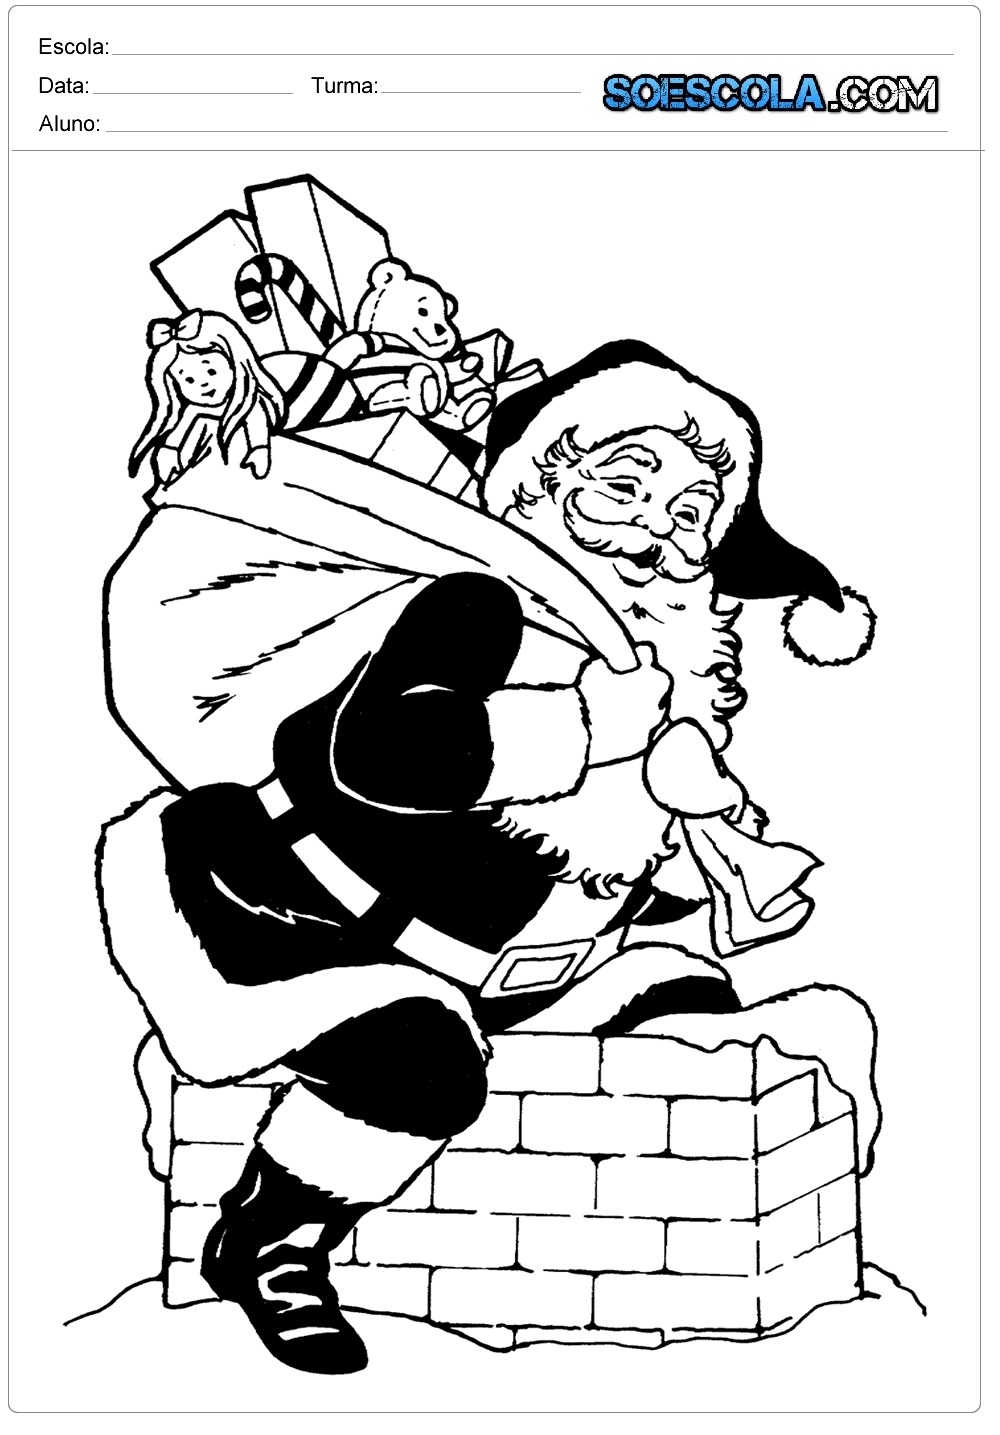 20 Desenhos de Natal para Colorir e Imprimir - Papai Noel em PDF.